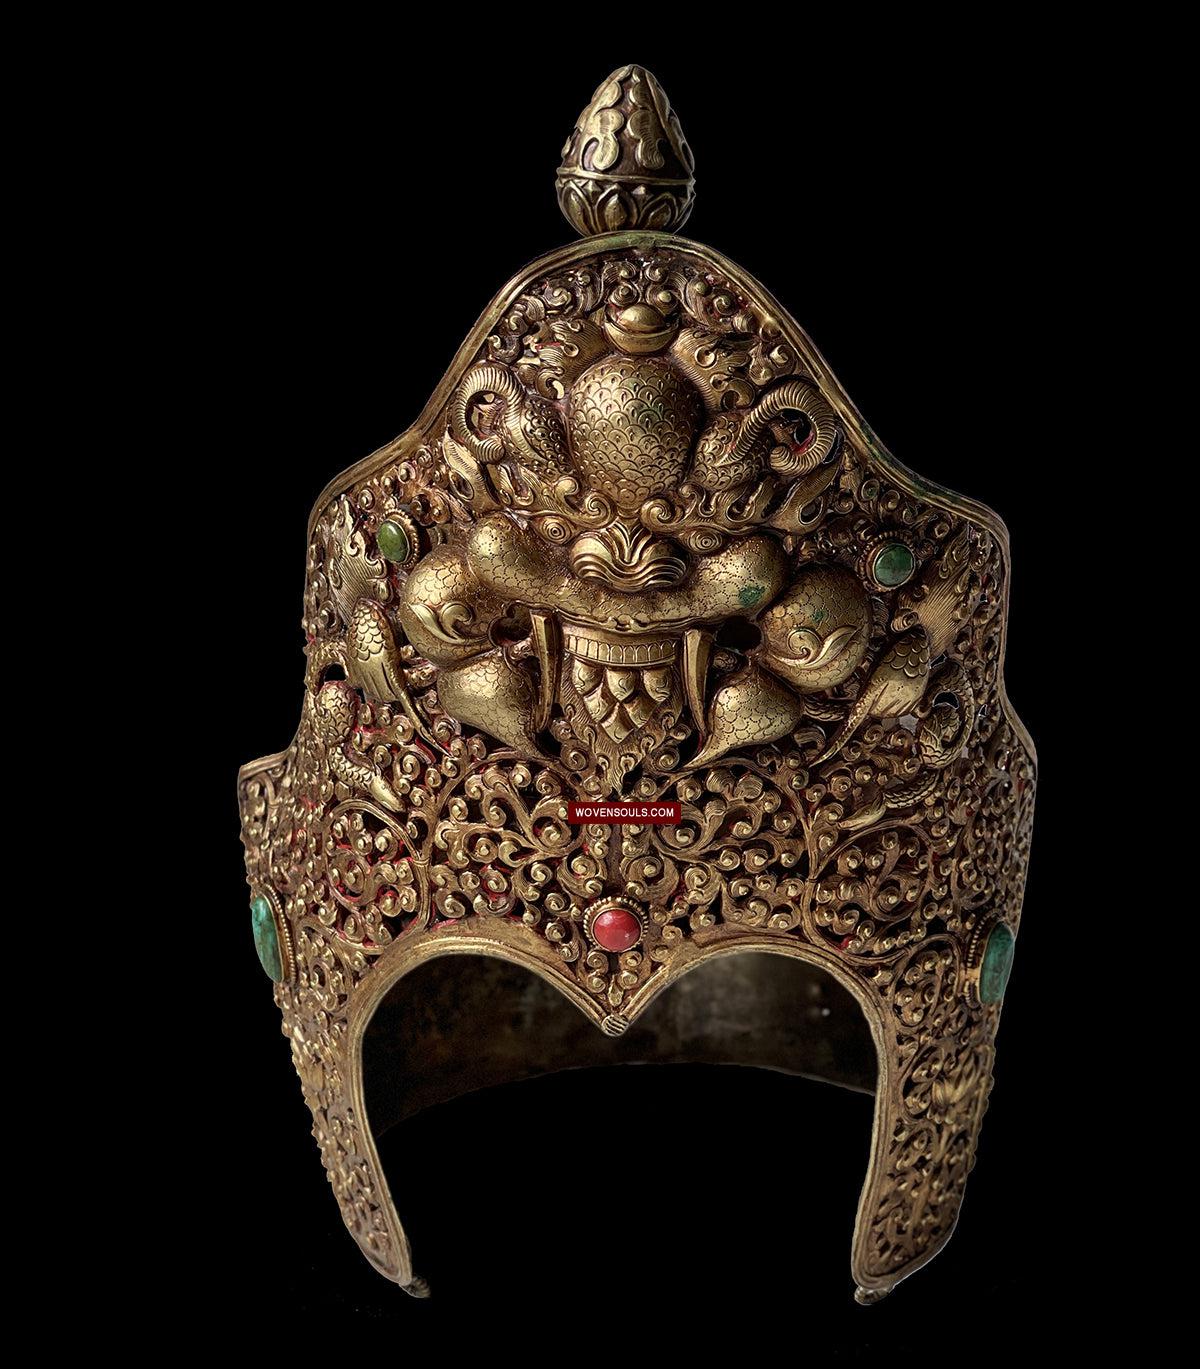 1620 Antique Buddhist Ceremonial Crown for Lama / Priest - WOVENSOULS  Antique Textiles & Art Gallery